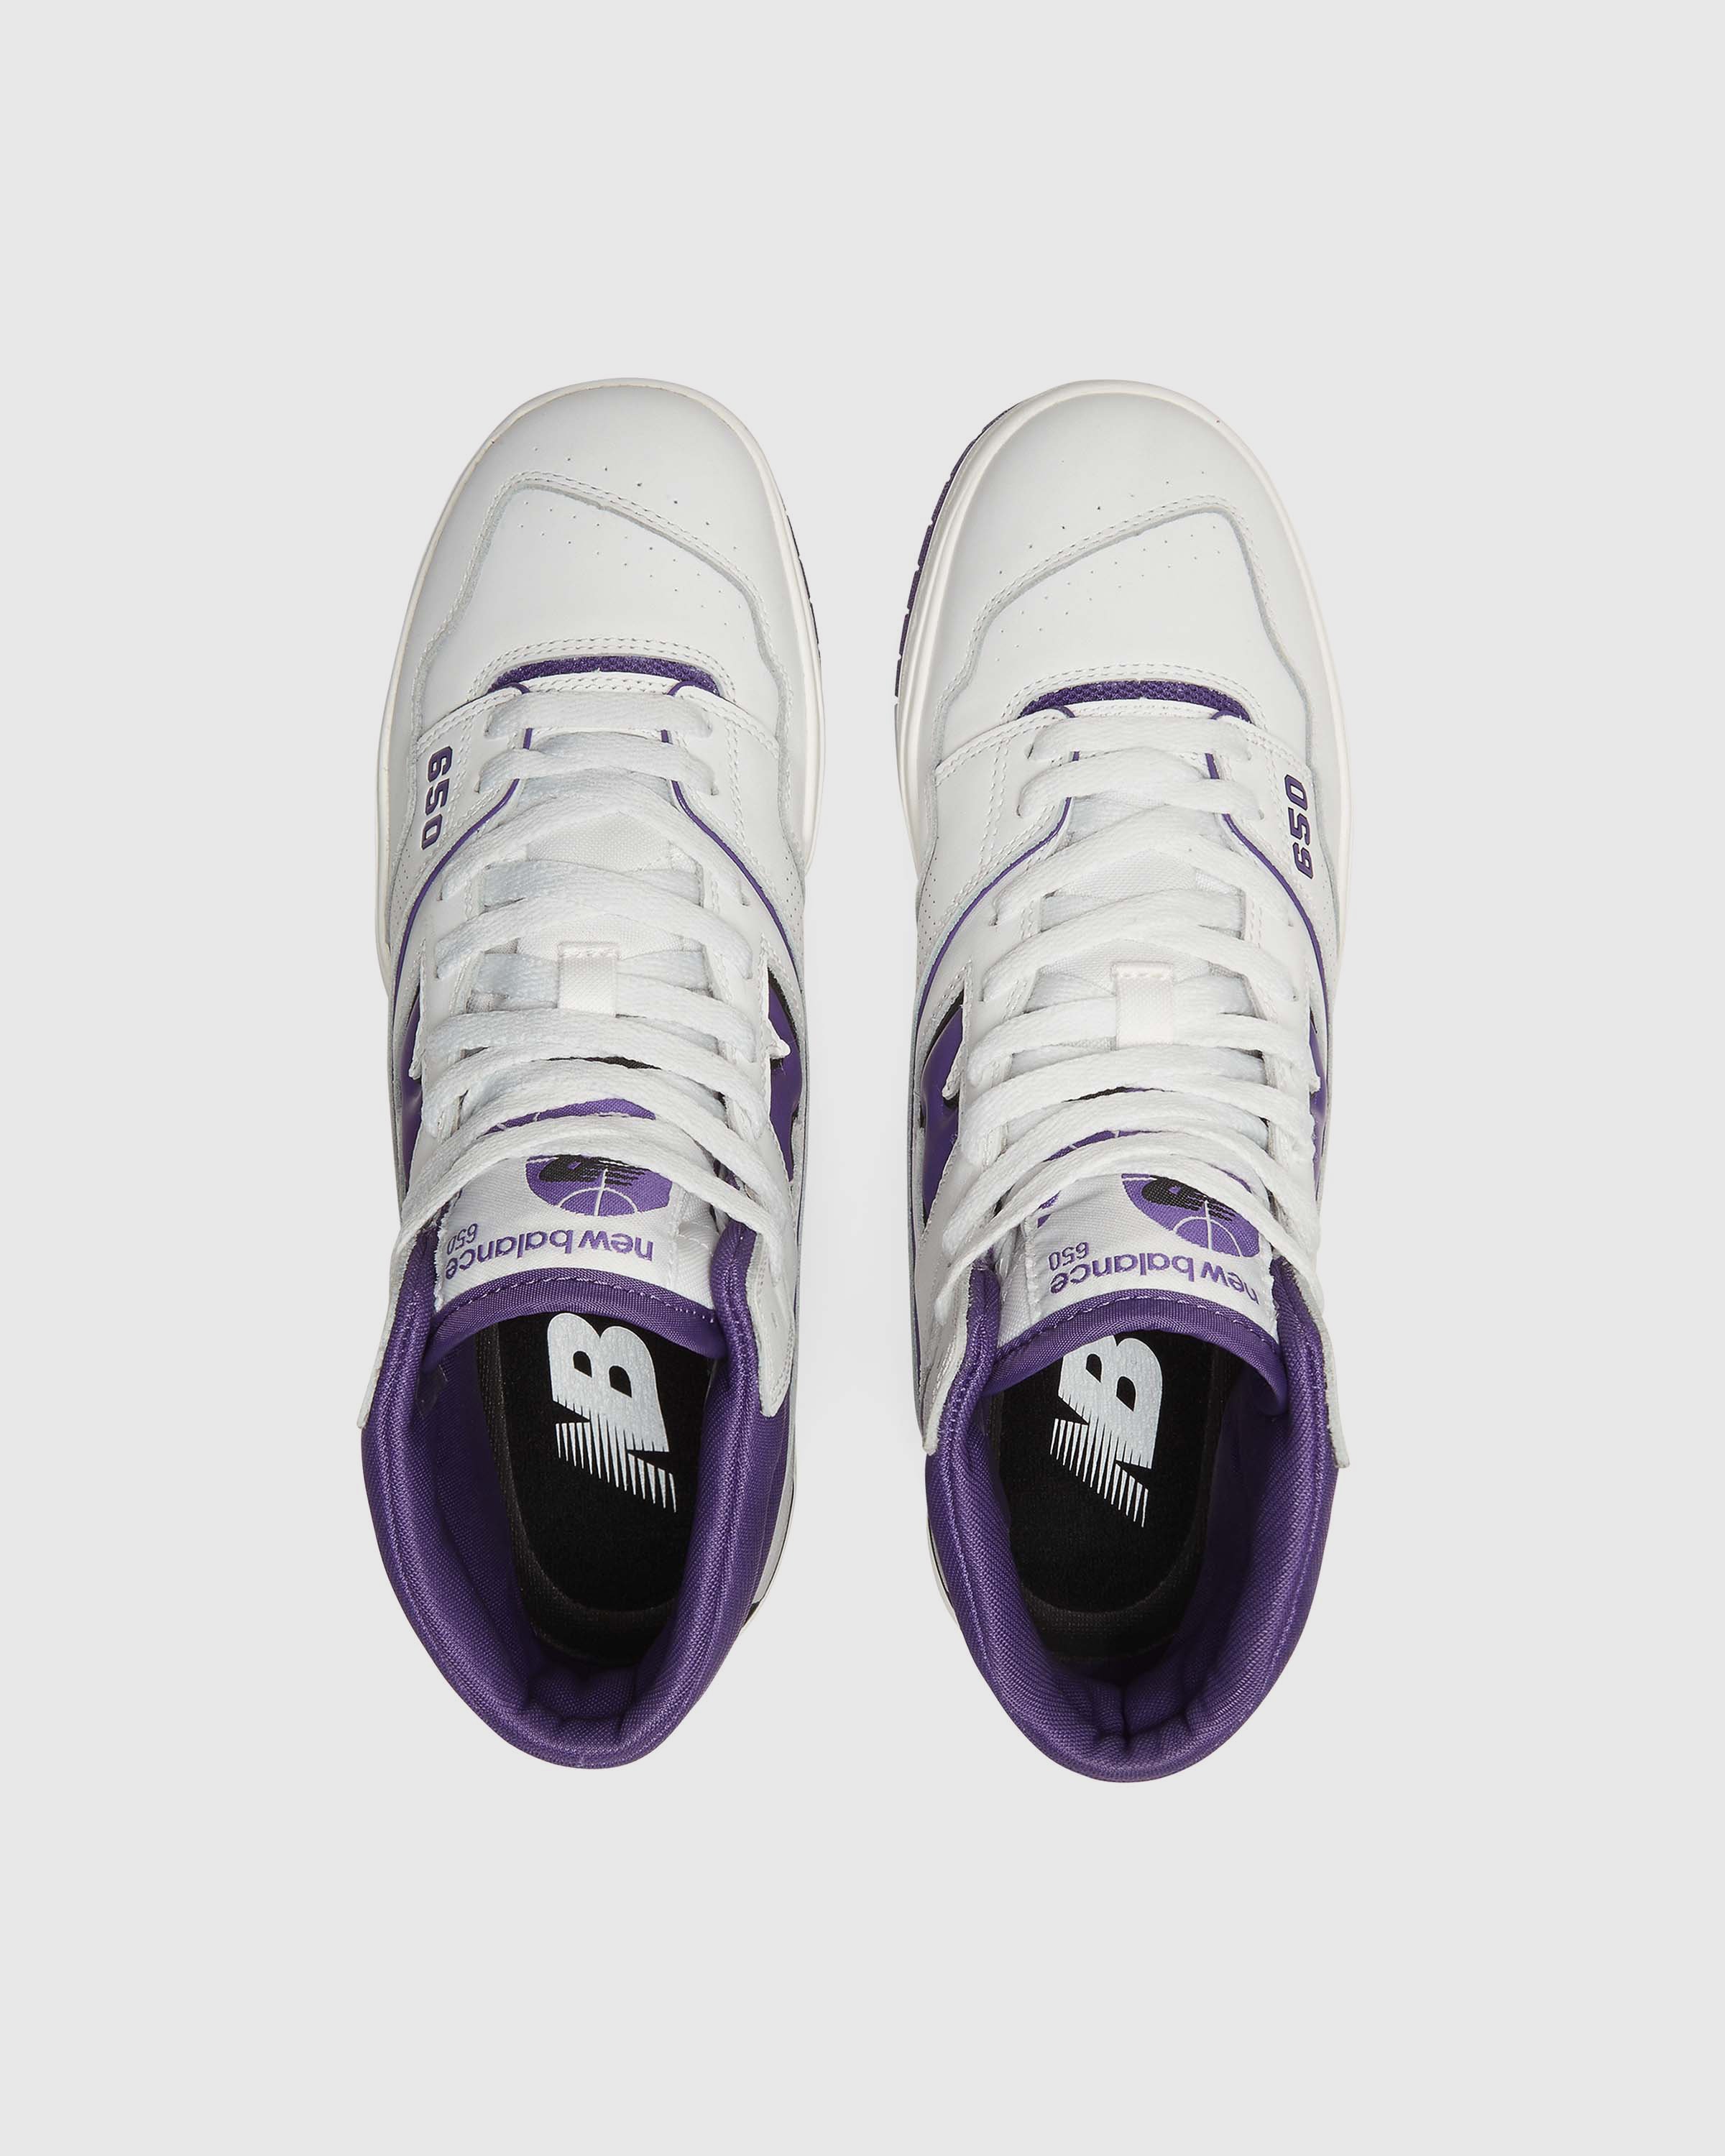 New Balance - BB650RCF White - Footwear - White - Image 5